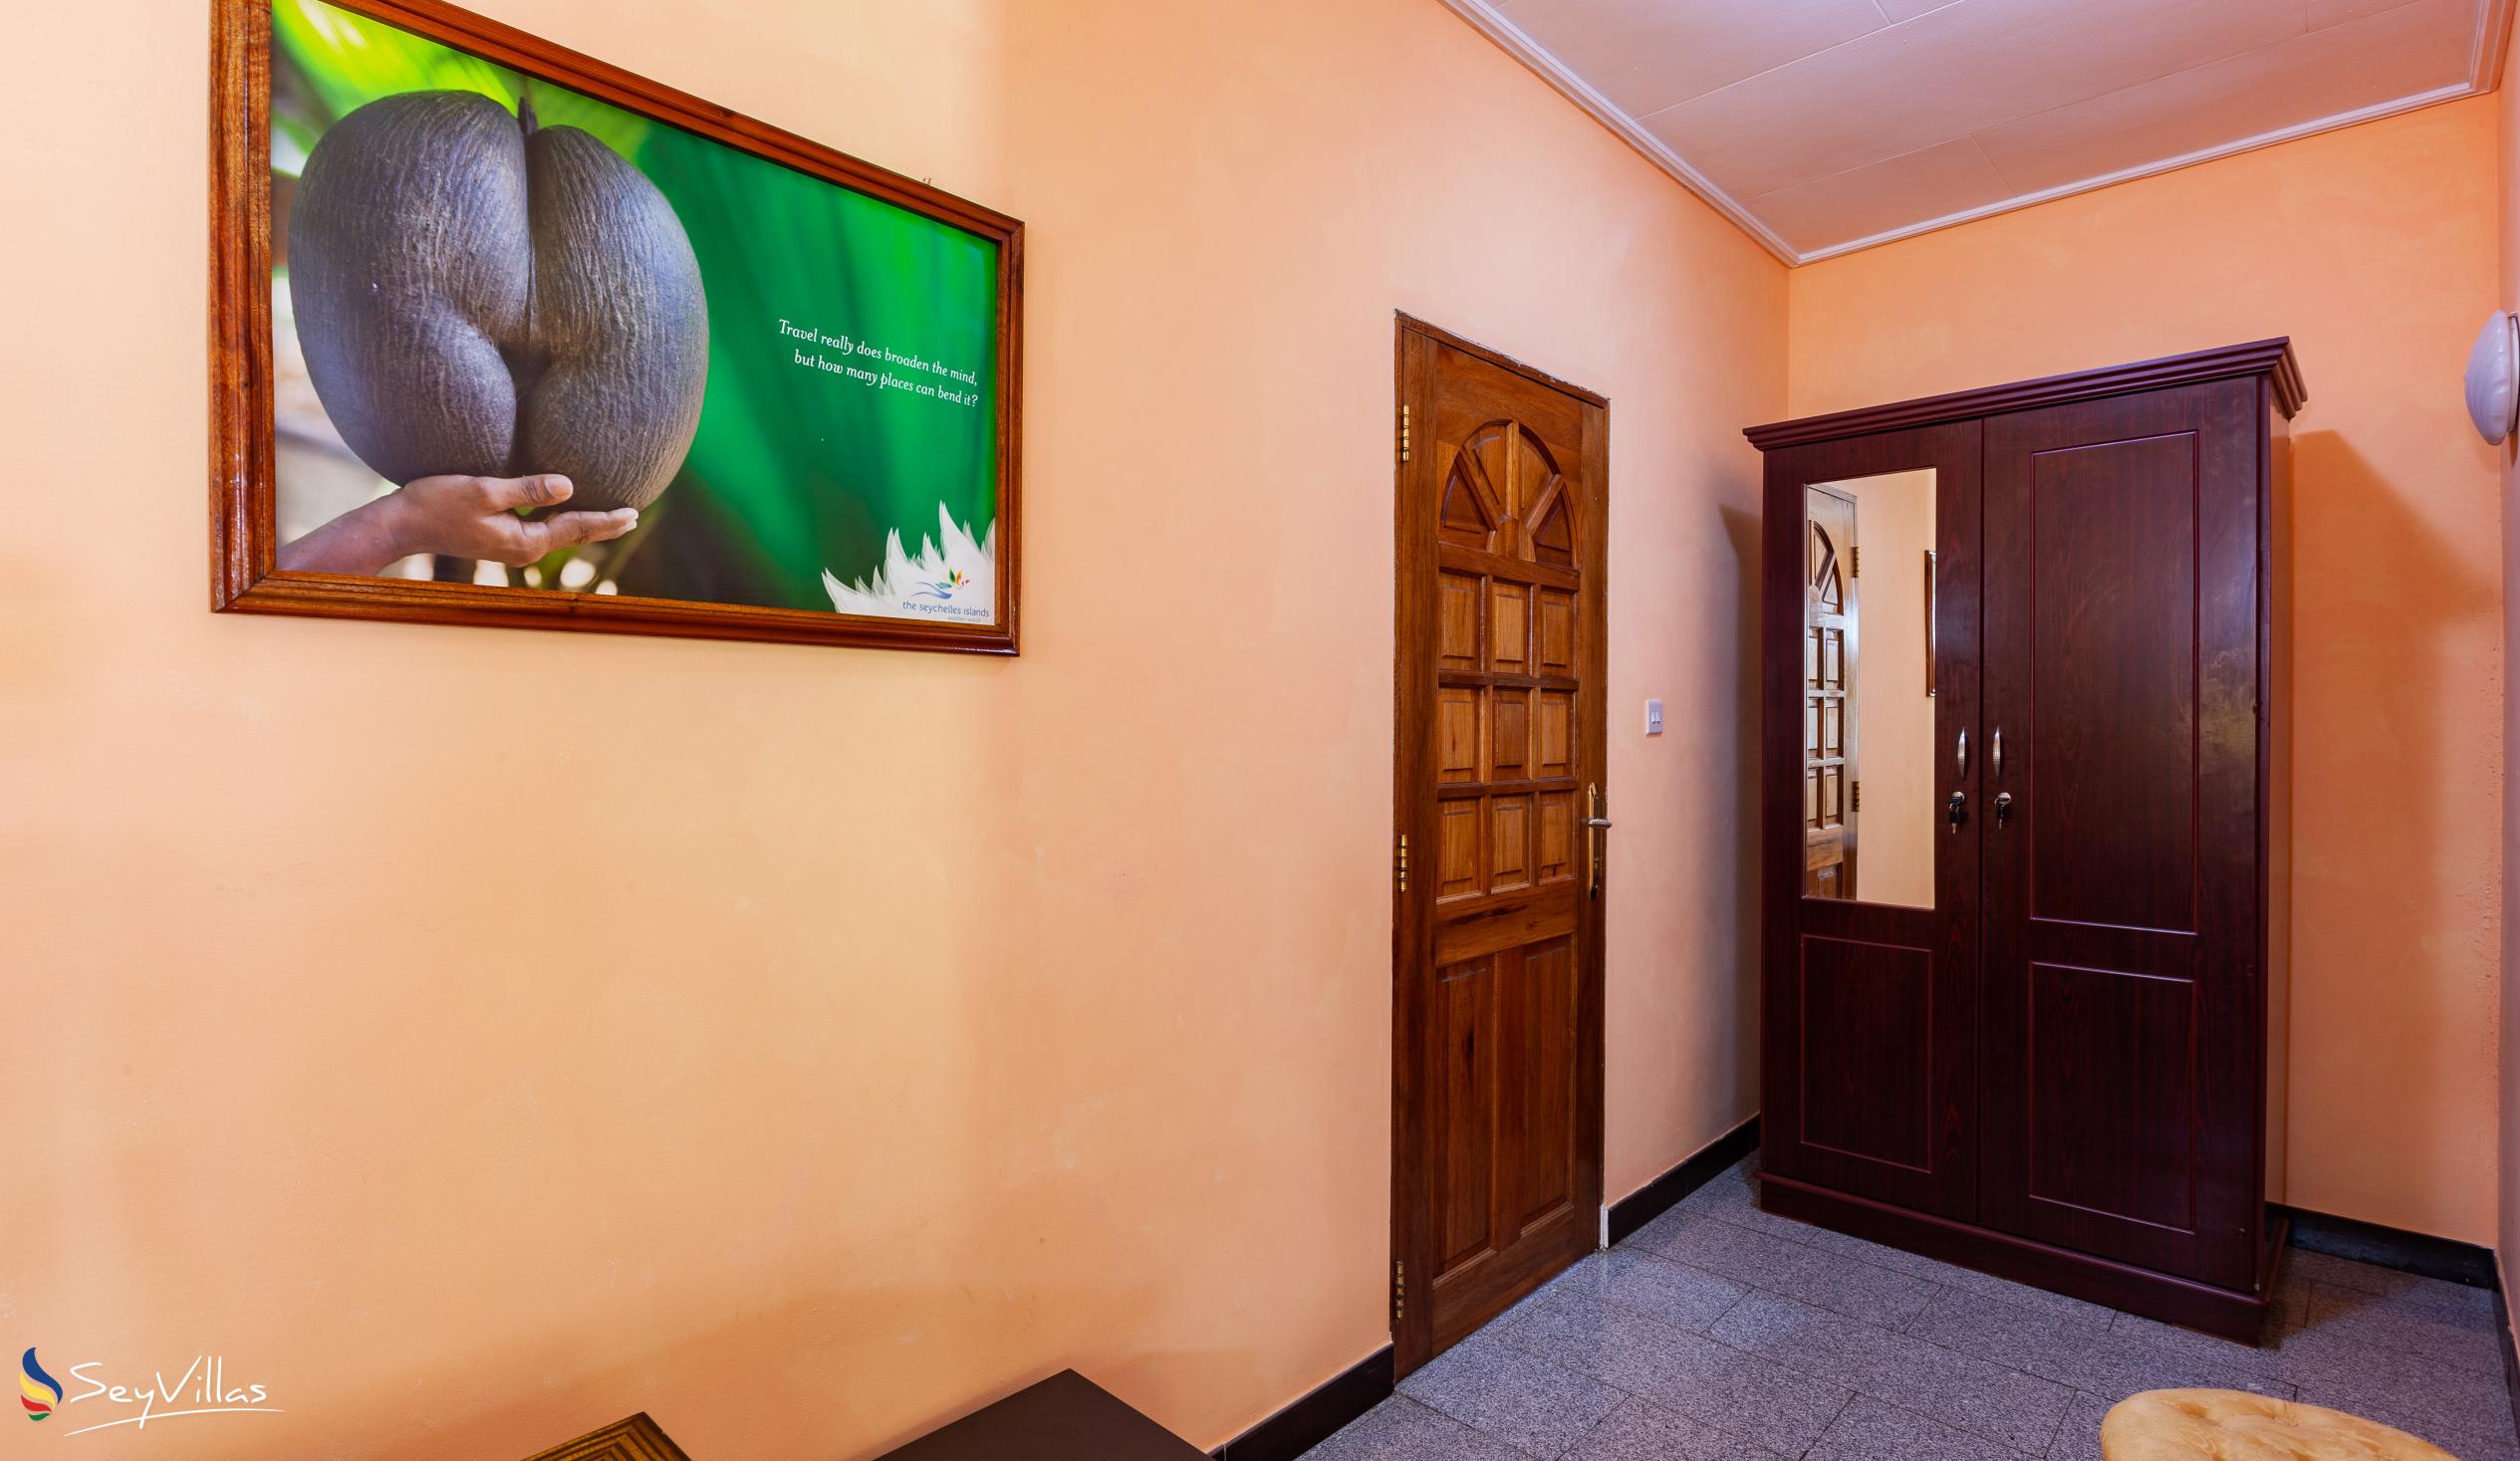 Photo 114: Villa Bananier - Superior Room - Praslin (Seychelles)